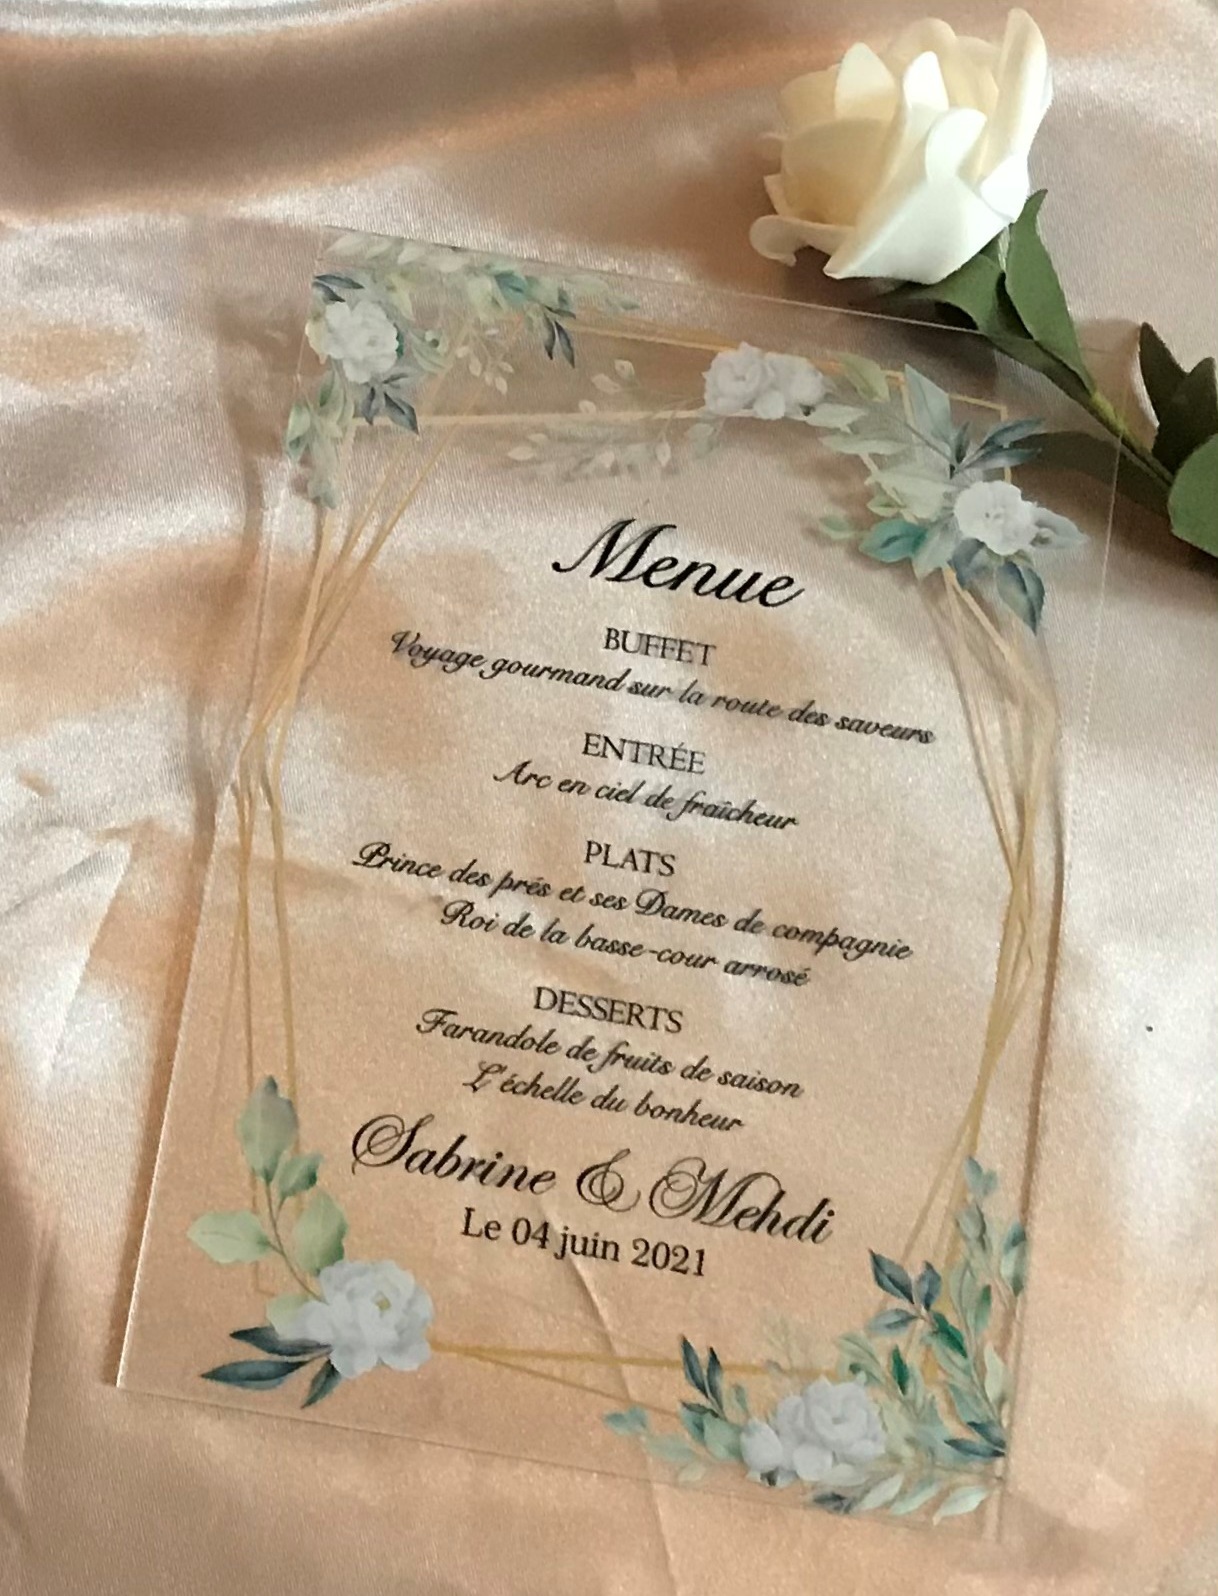 Acrylic Wedding Invitations,10pcs Custom and 50 similar items